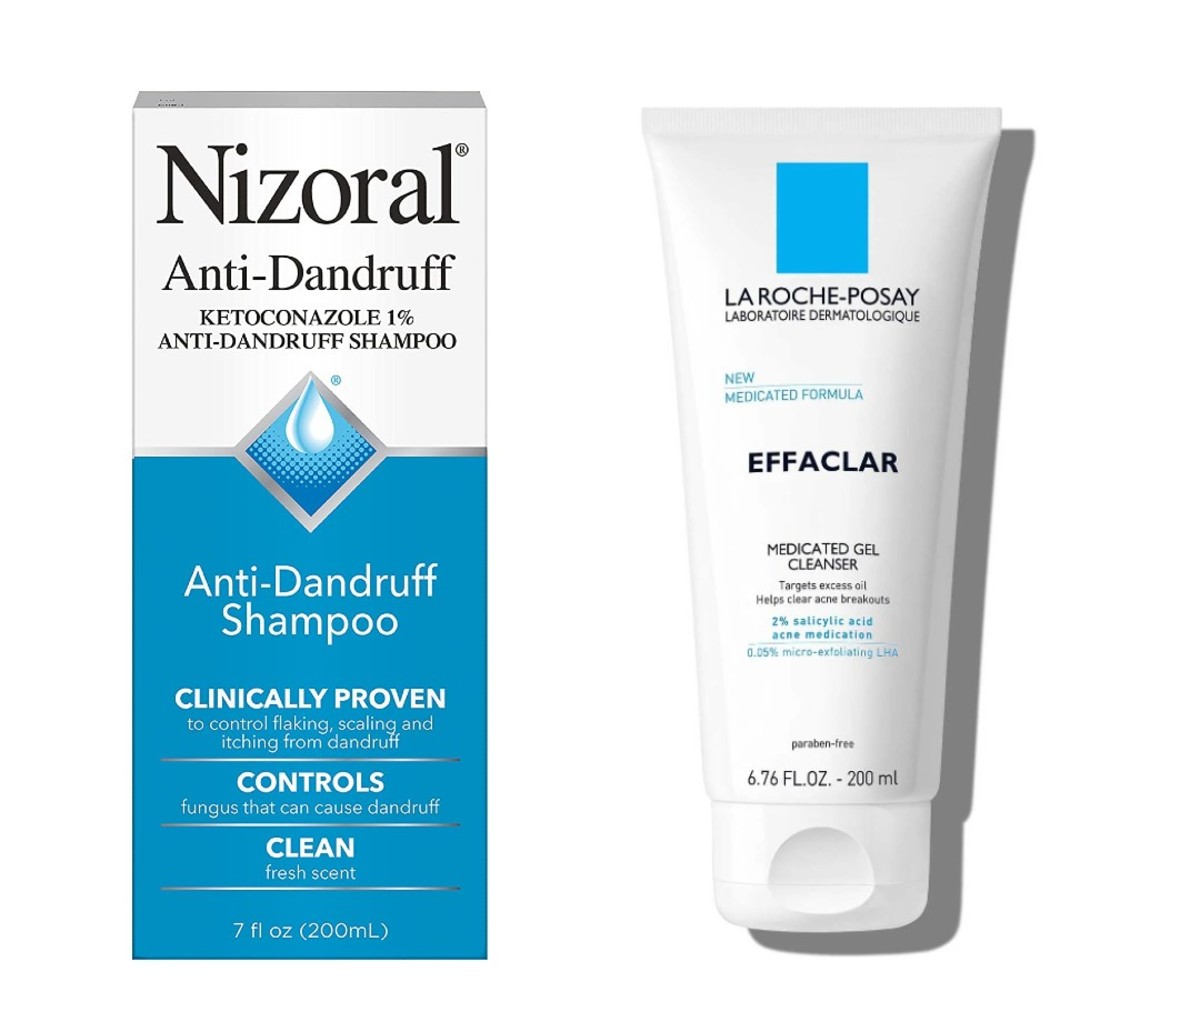 Nizoral Anti-Dandruff Shampoo with Ketoconazole and La Roche-Posay Effaclar Facial Cleanser with Salicylic Acid.